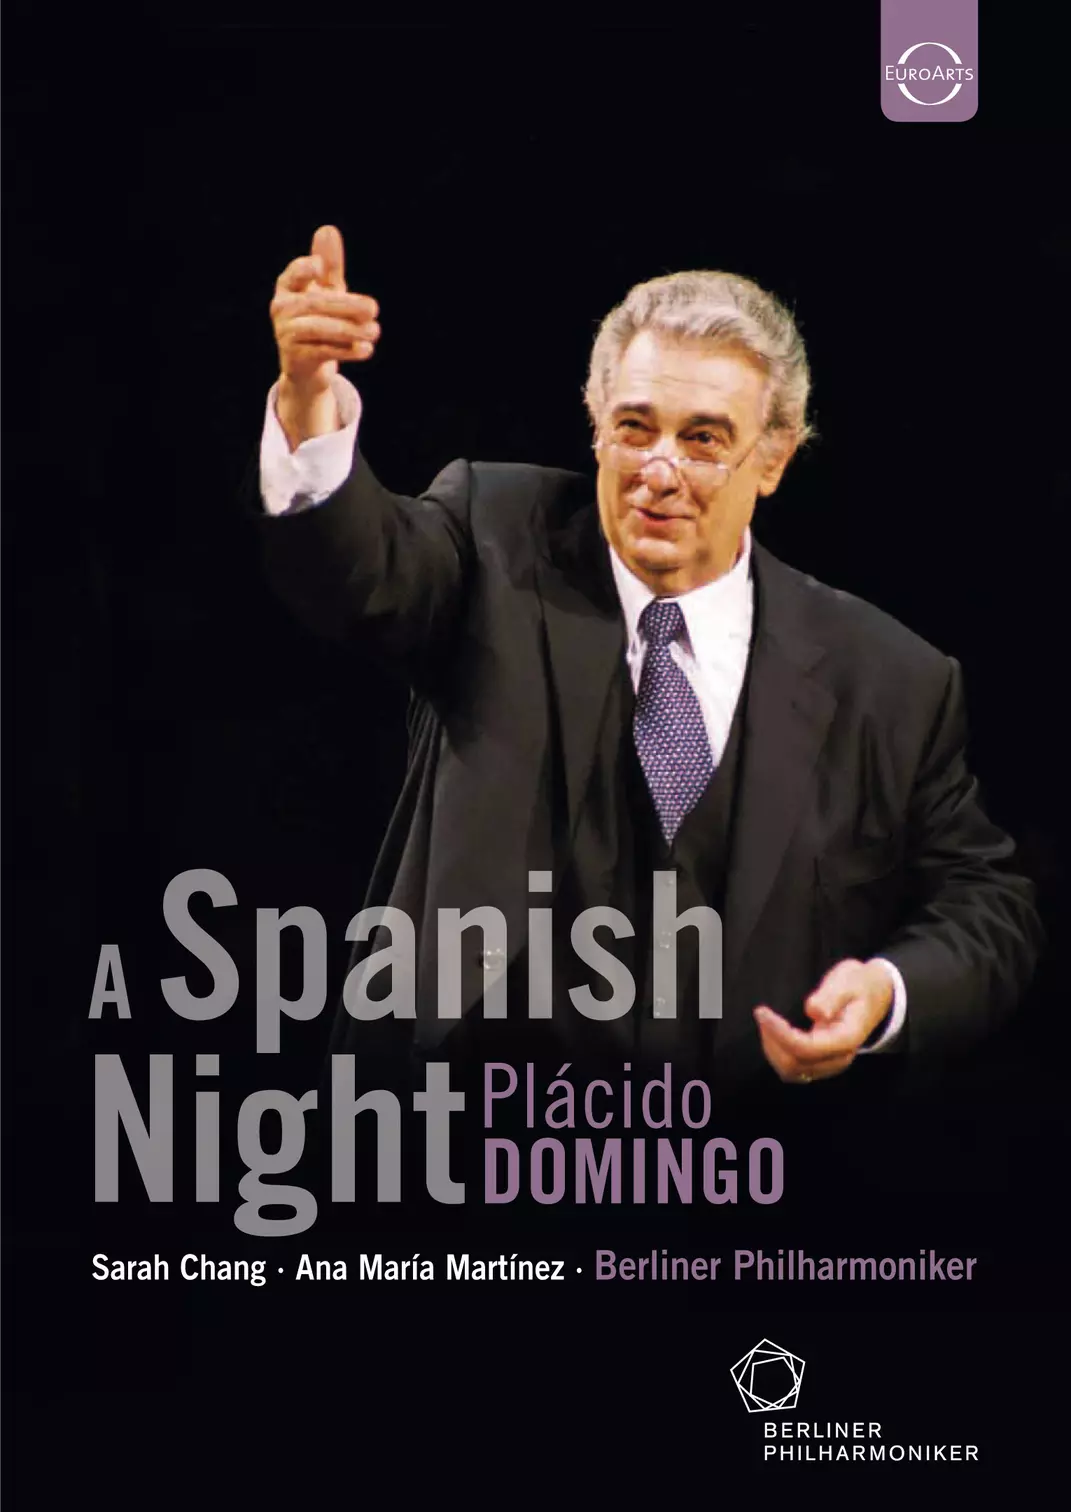 Berliner Philharmoniker - Plácido Domingo Conducts A Spanish Night - Waldbühne Berlin